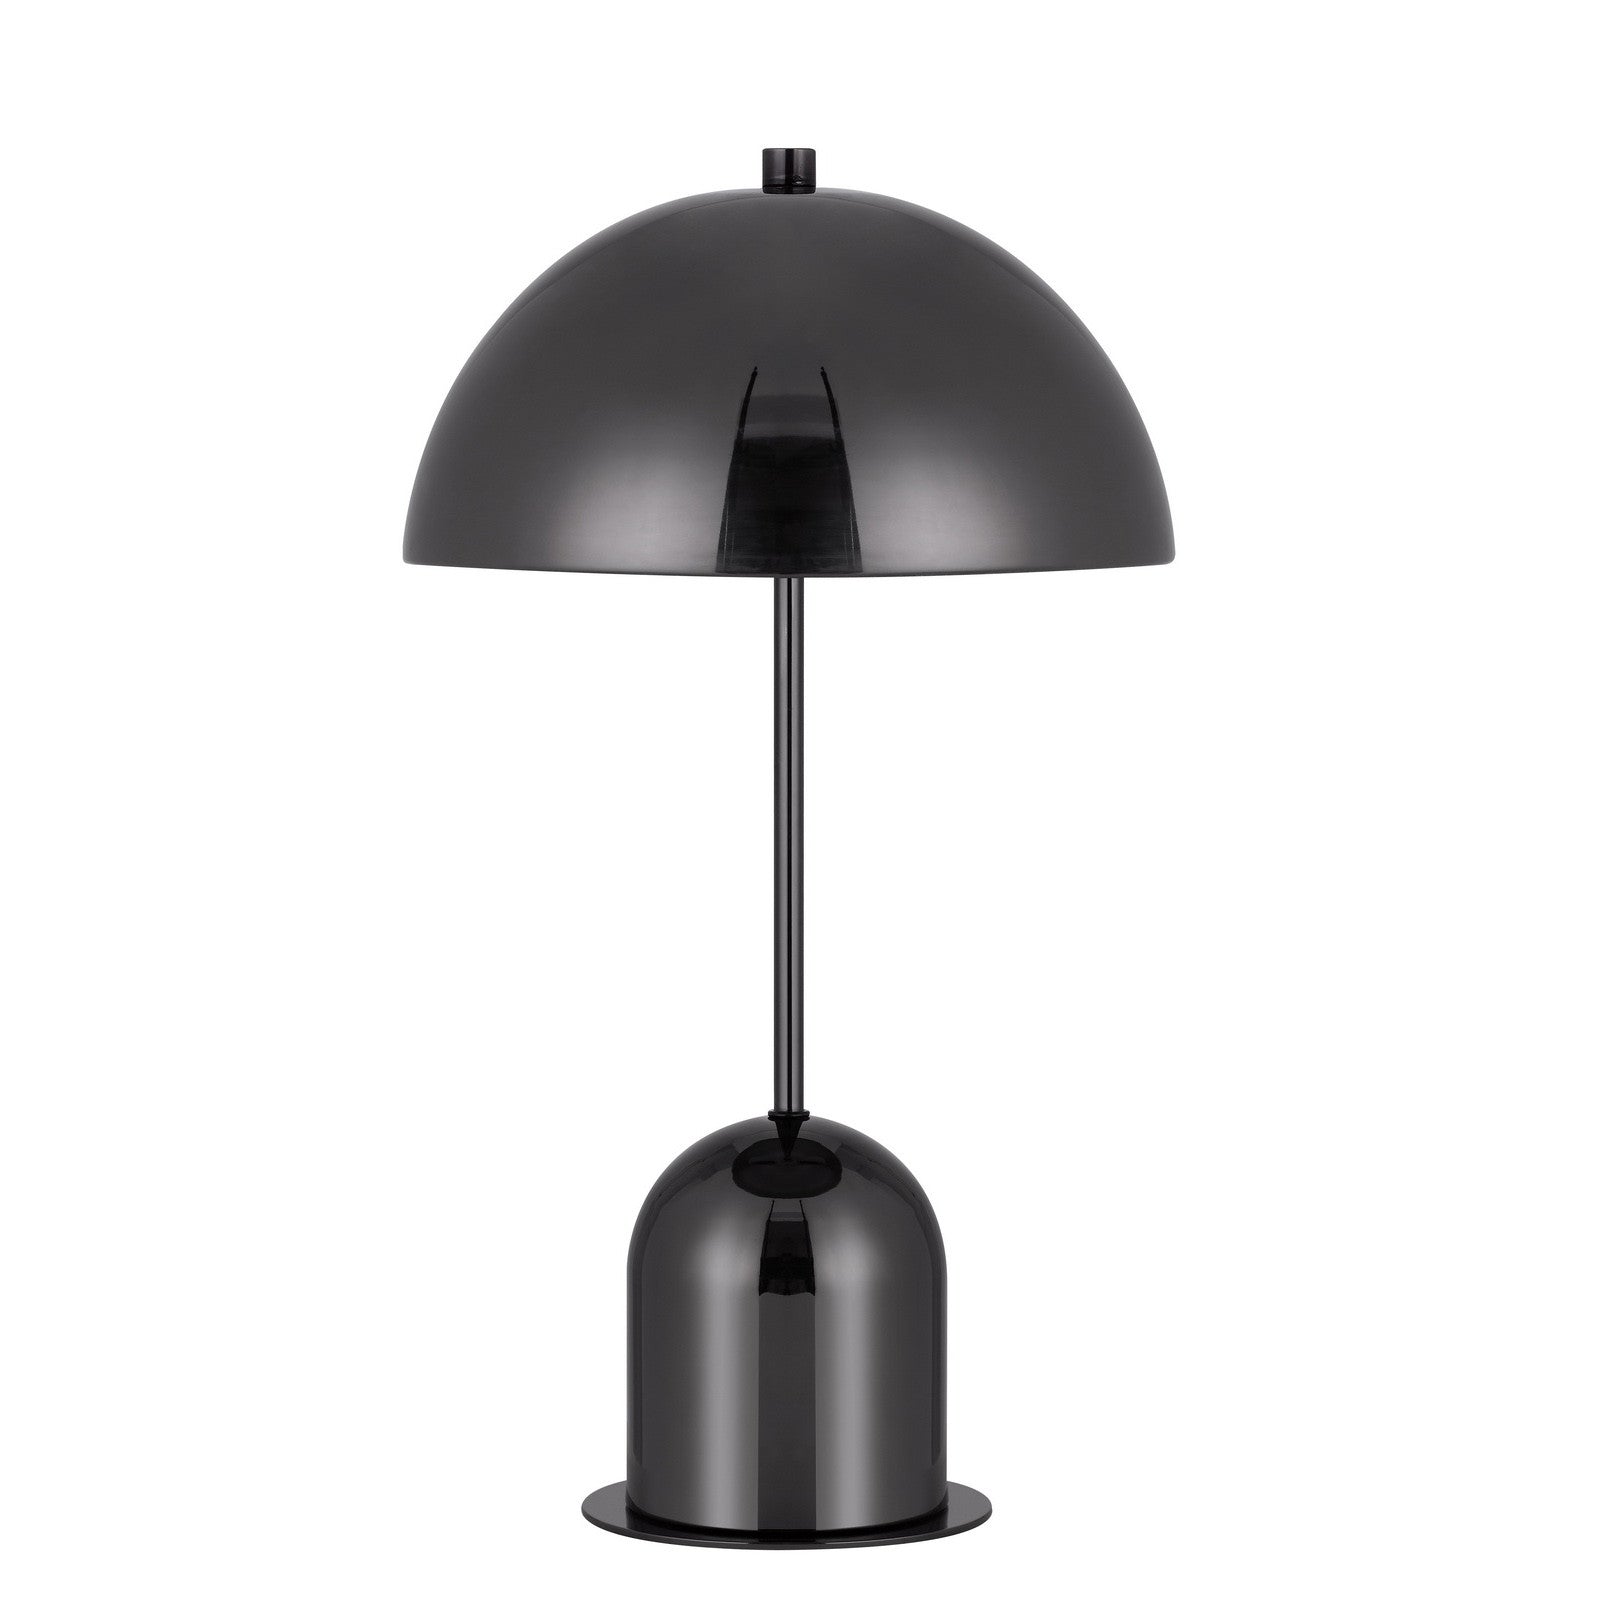 20" Gunmetal Metal Desk Table Lamp With Gunmetal Dome Shade